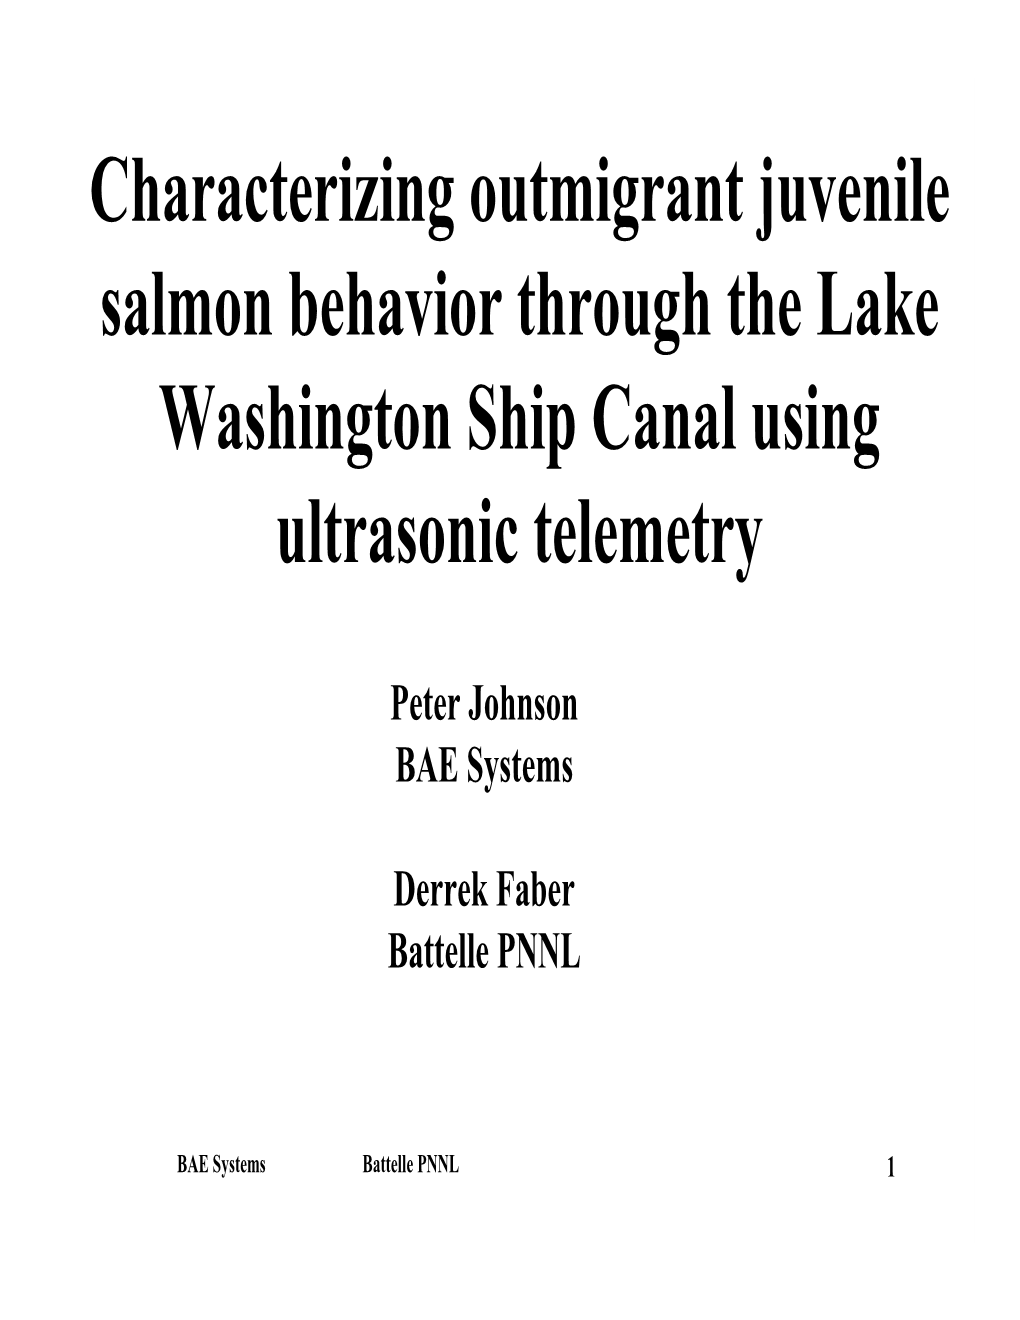 Characterizing Outmigrant Juvenile Salmon Behavior Through the Lake Washington Ship Canal Using Ultrasonic Telemetry